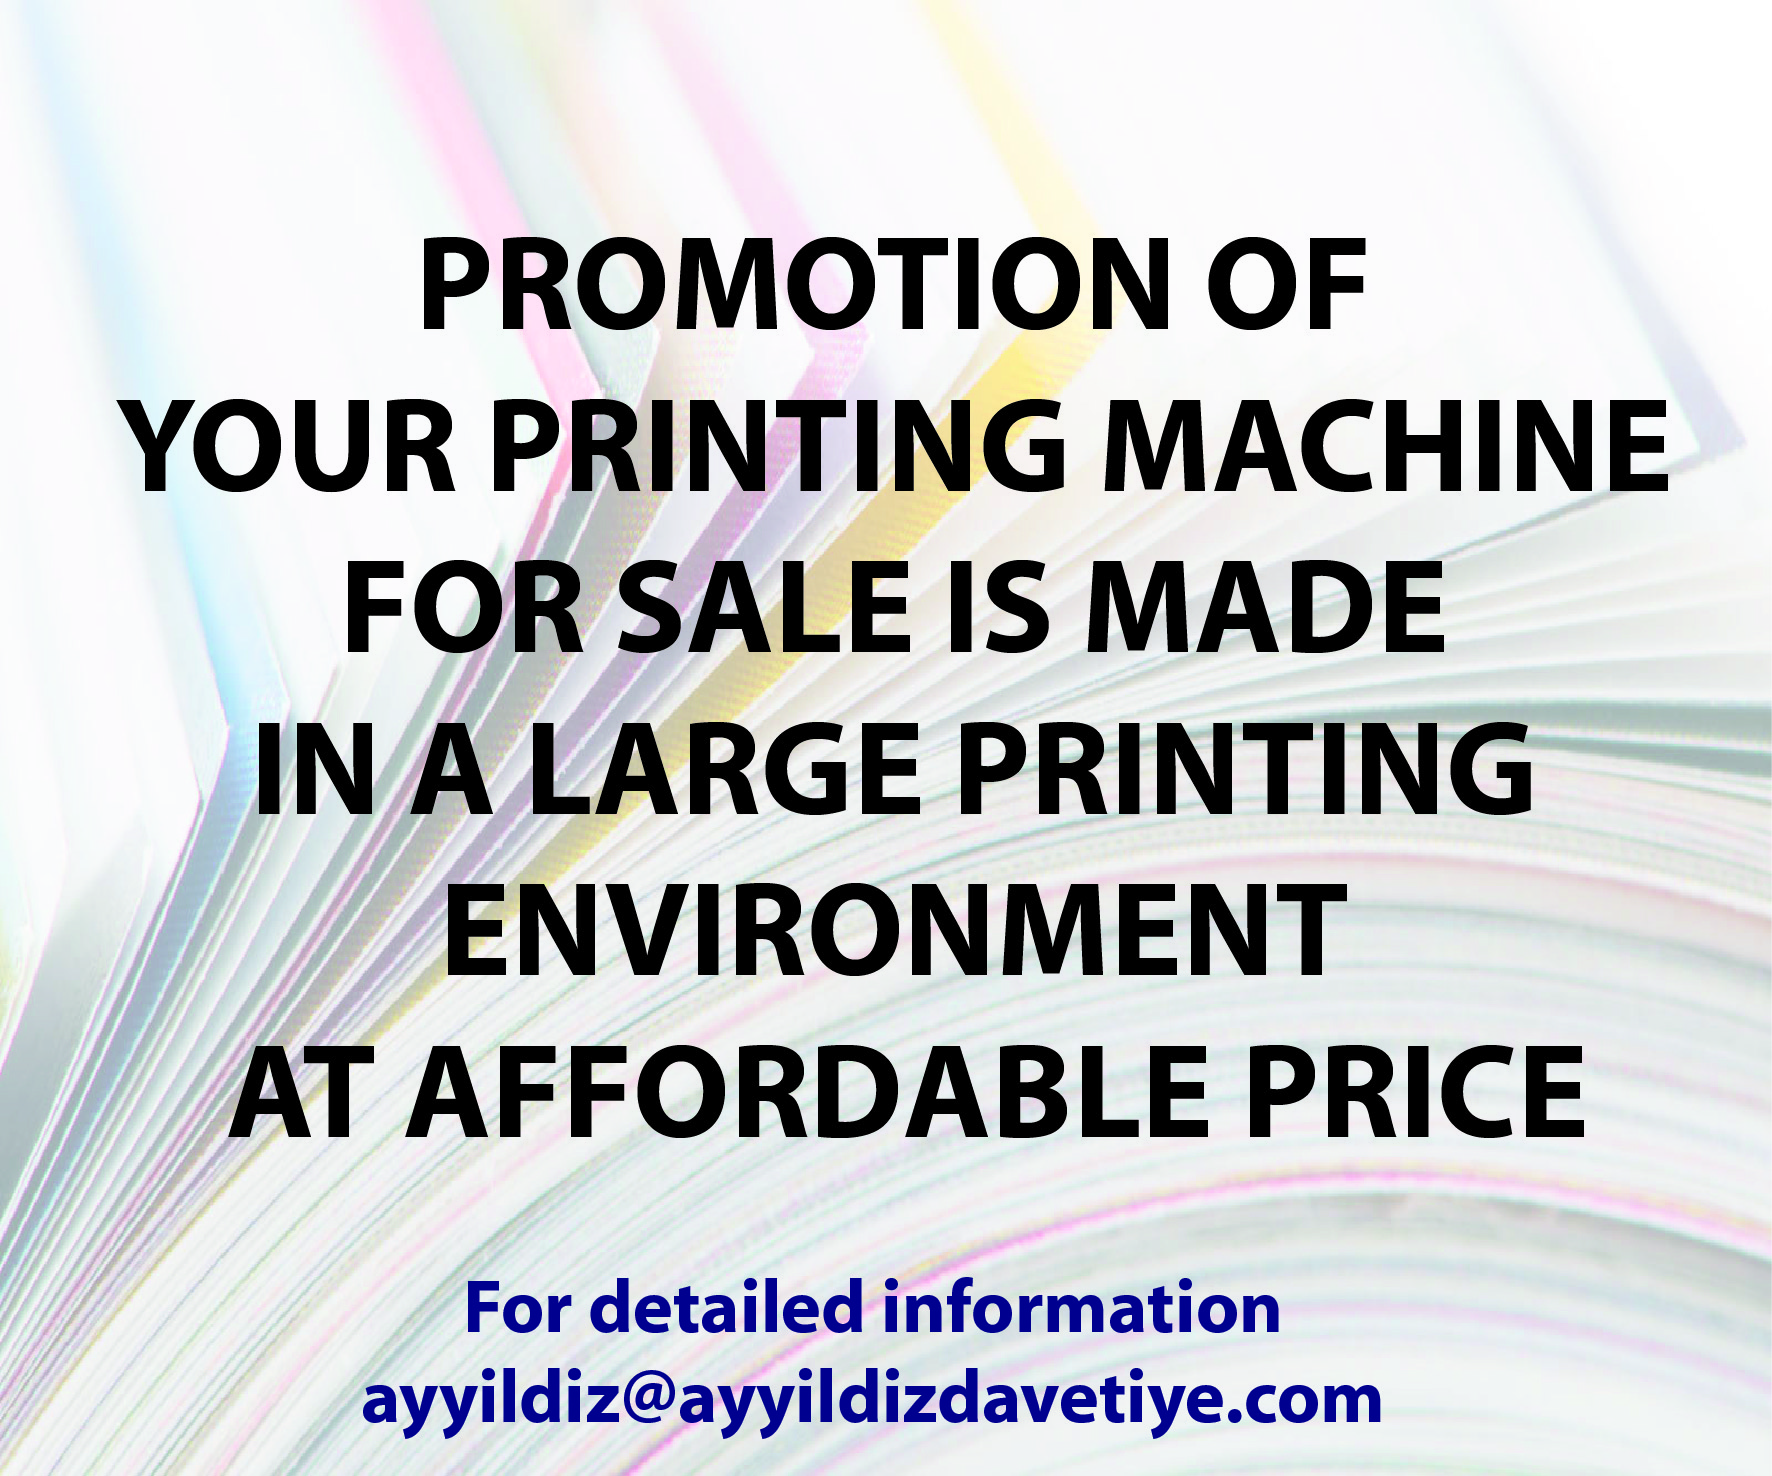 Presentation of printing machine for sale